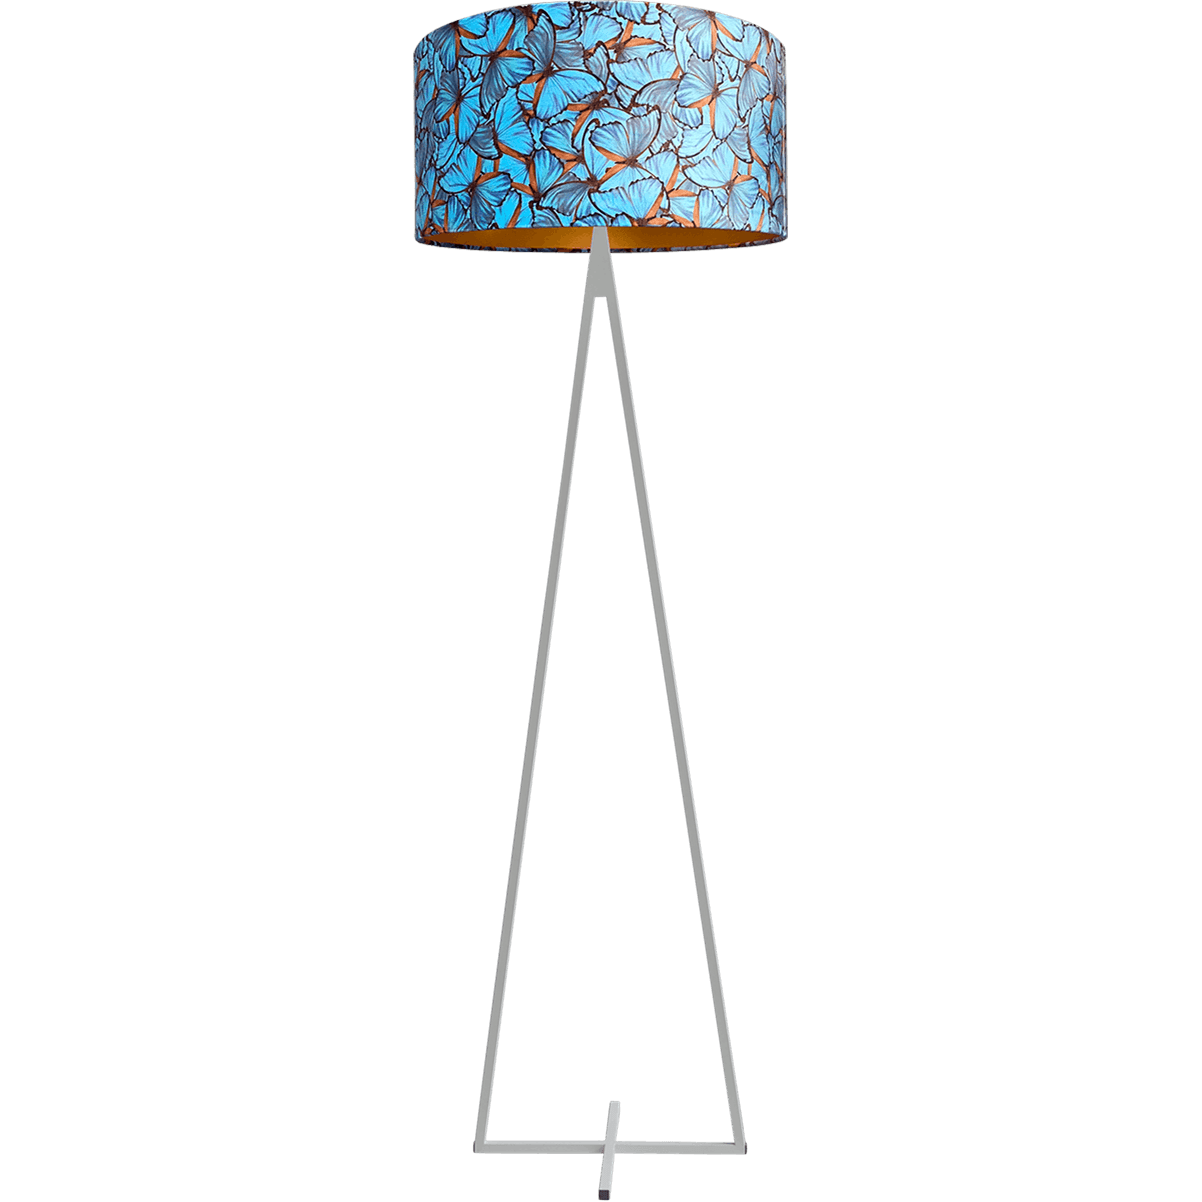 Vloerlamp Cross Triangle wit structuur hoogte 158cm inclusief lampenkap met butterflymotief Artik butterfly 52/52/25 - MASTERLIGHT